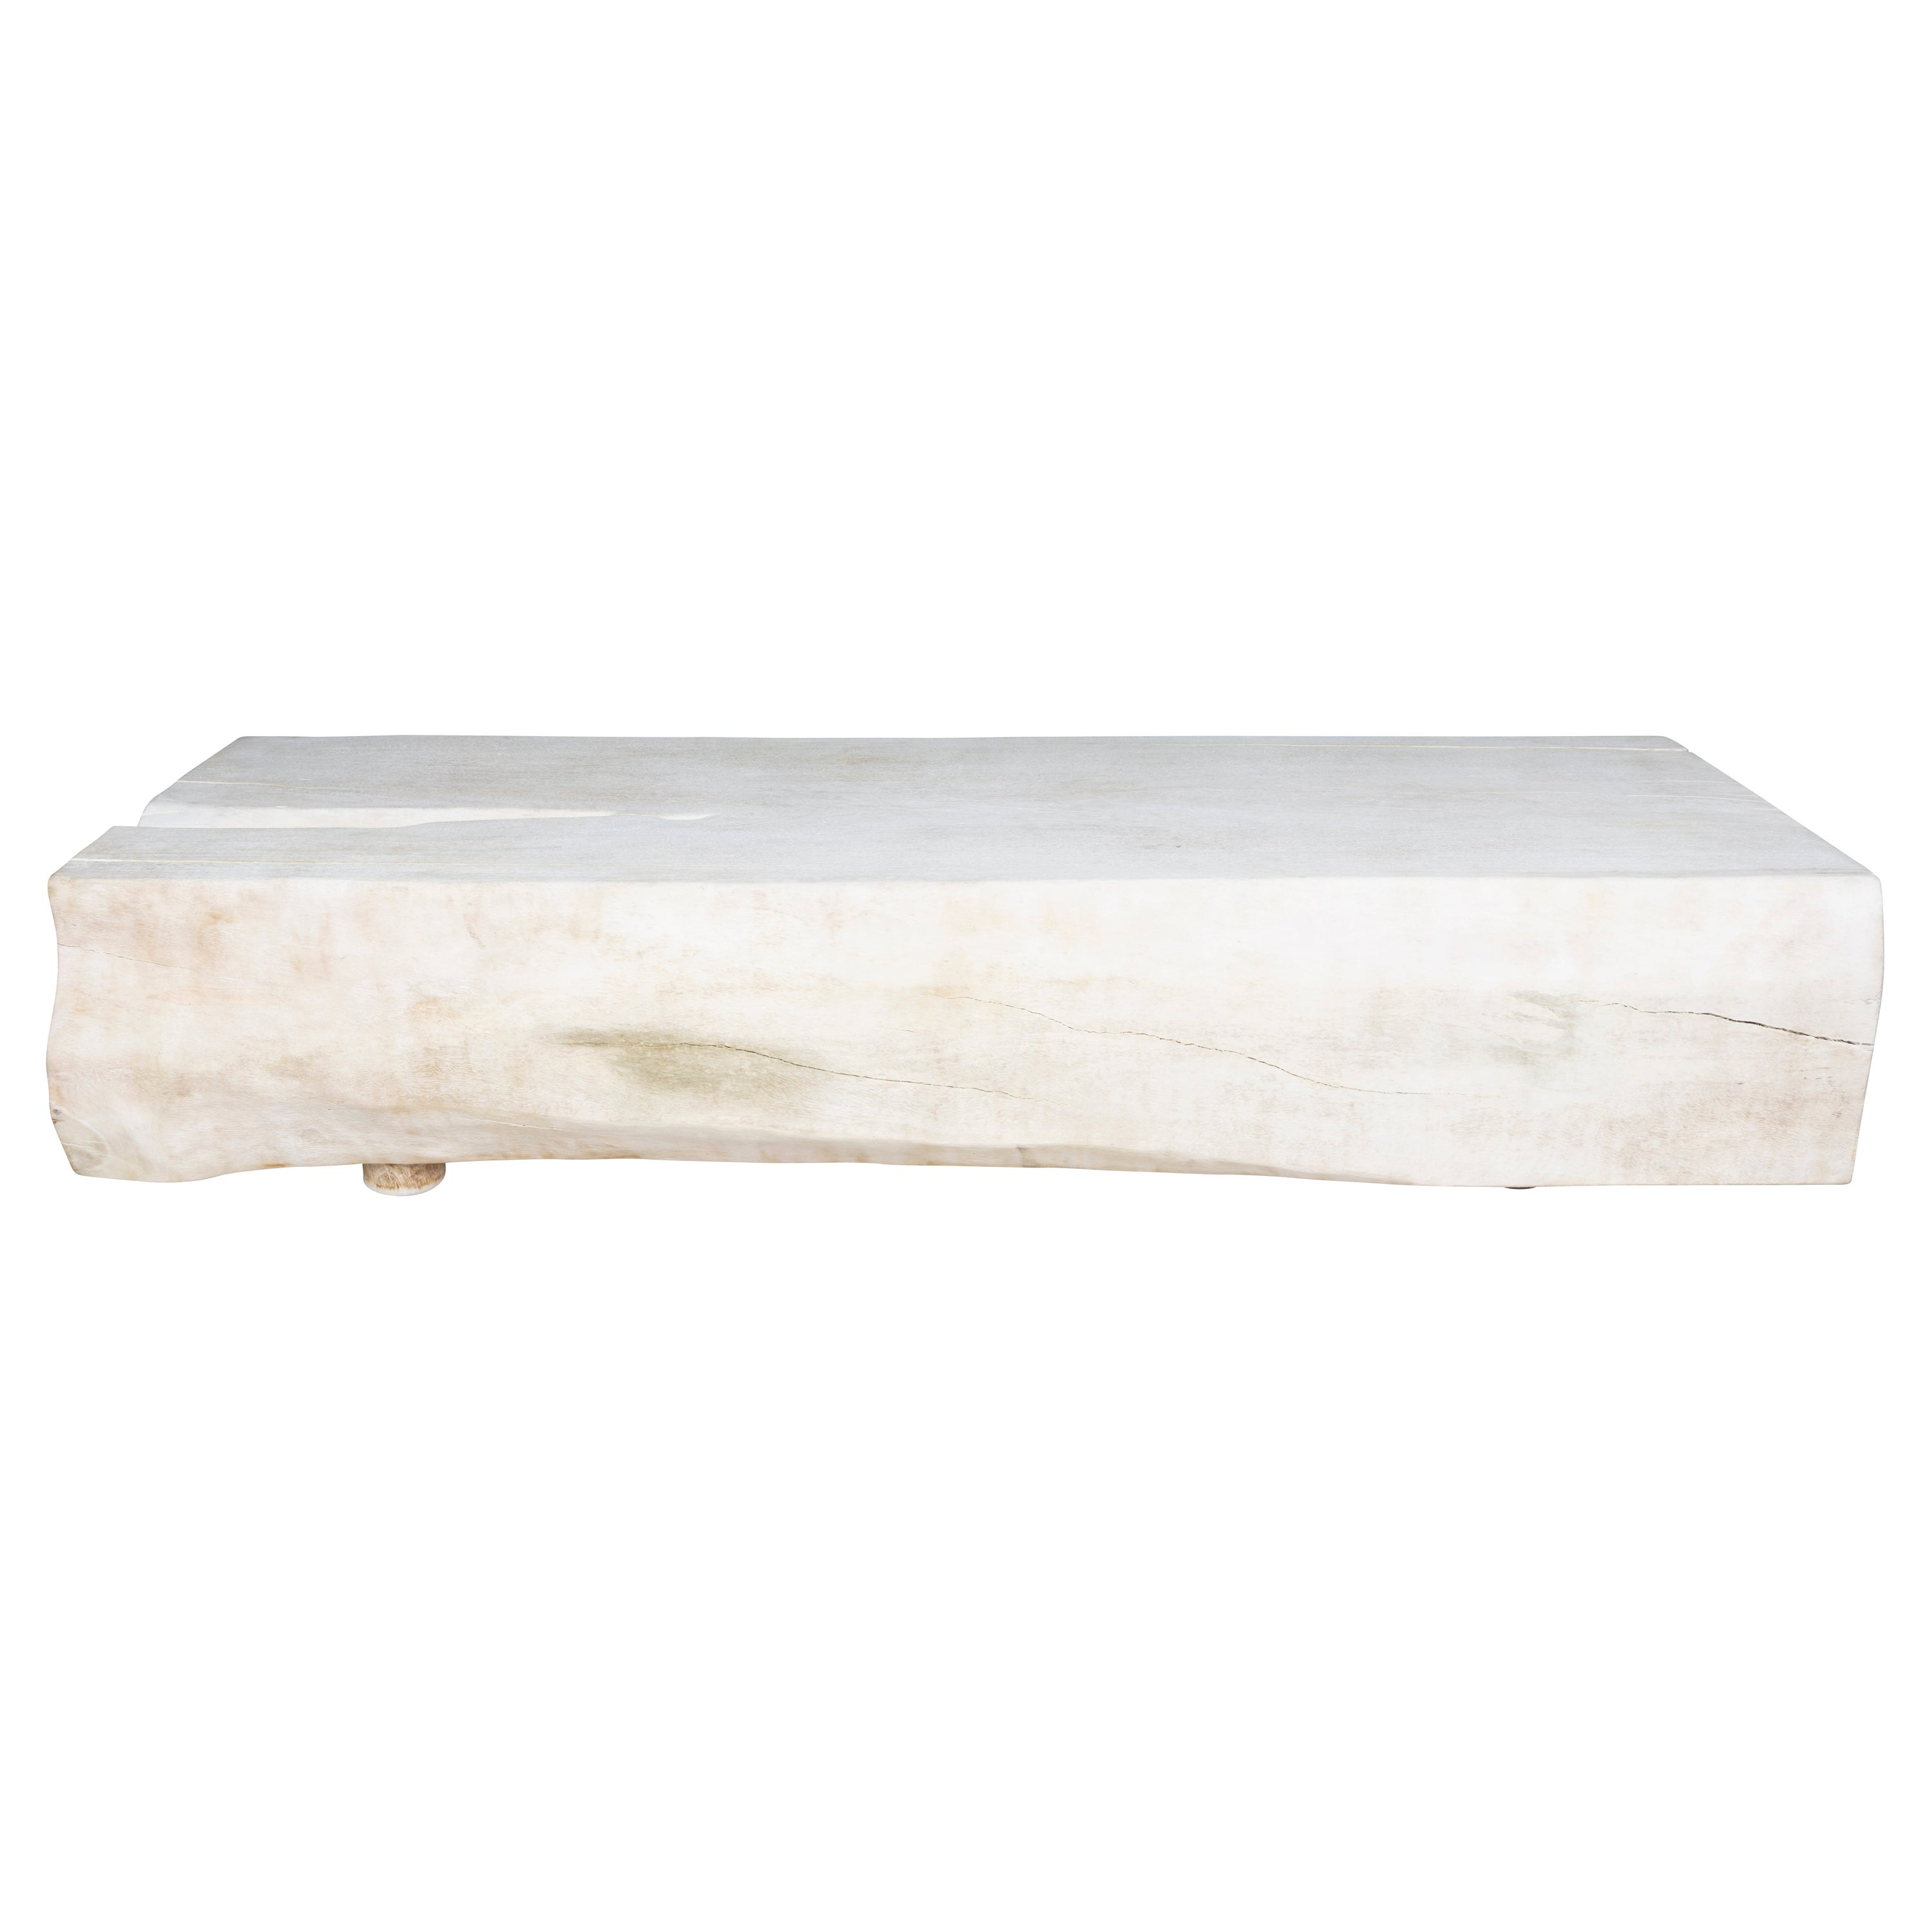 Table basse monumentale en bois de lyche blanchi en forme de lyche